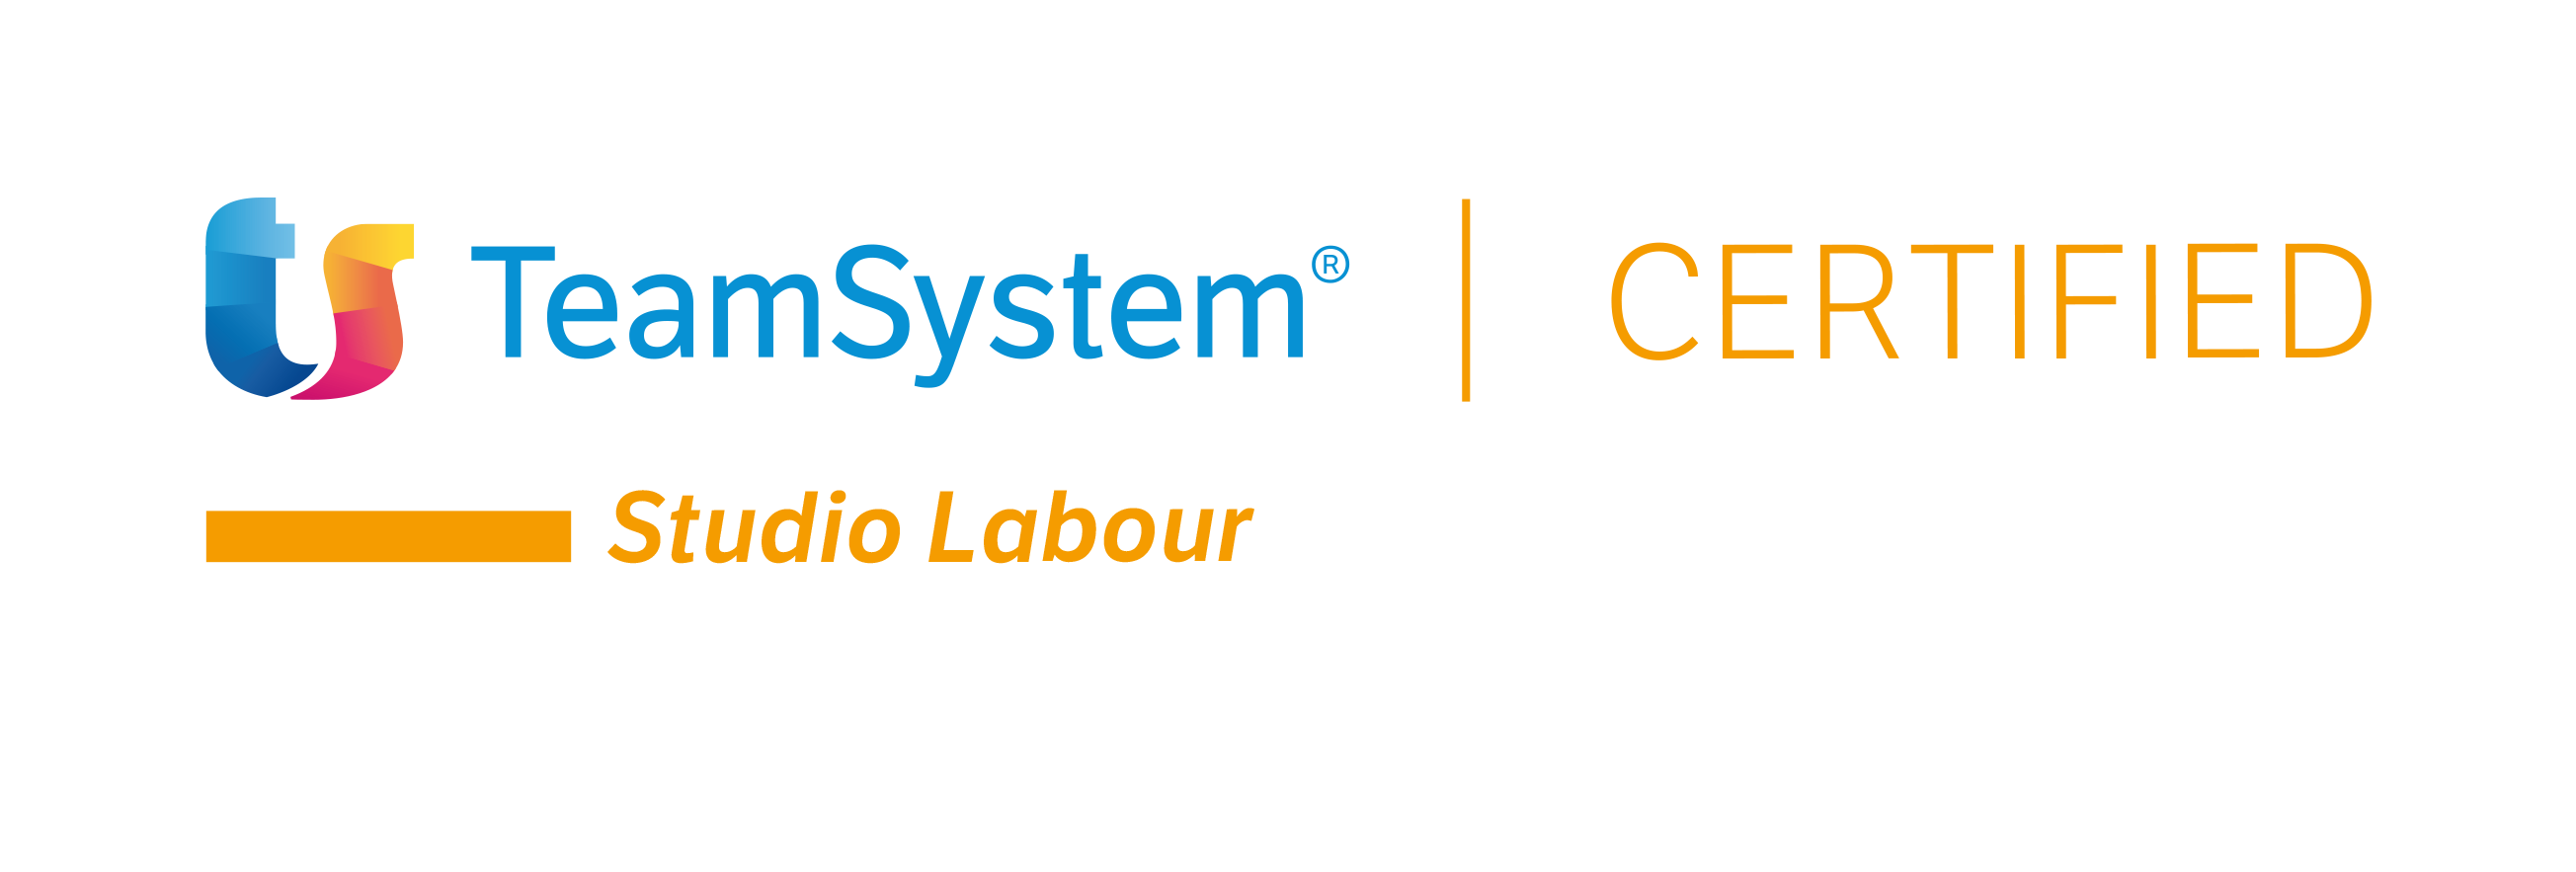 TeamSystem Studio Labour